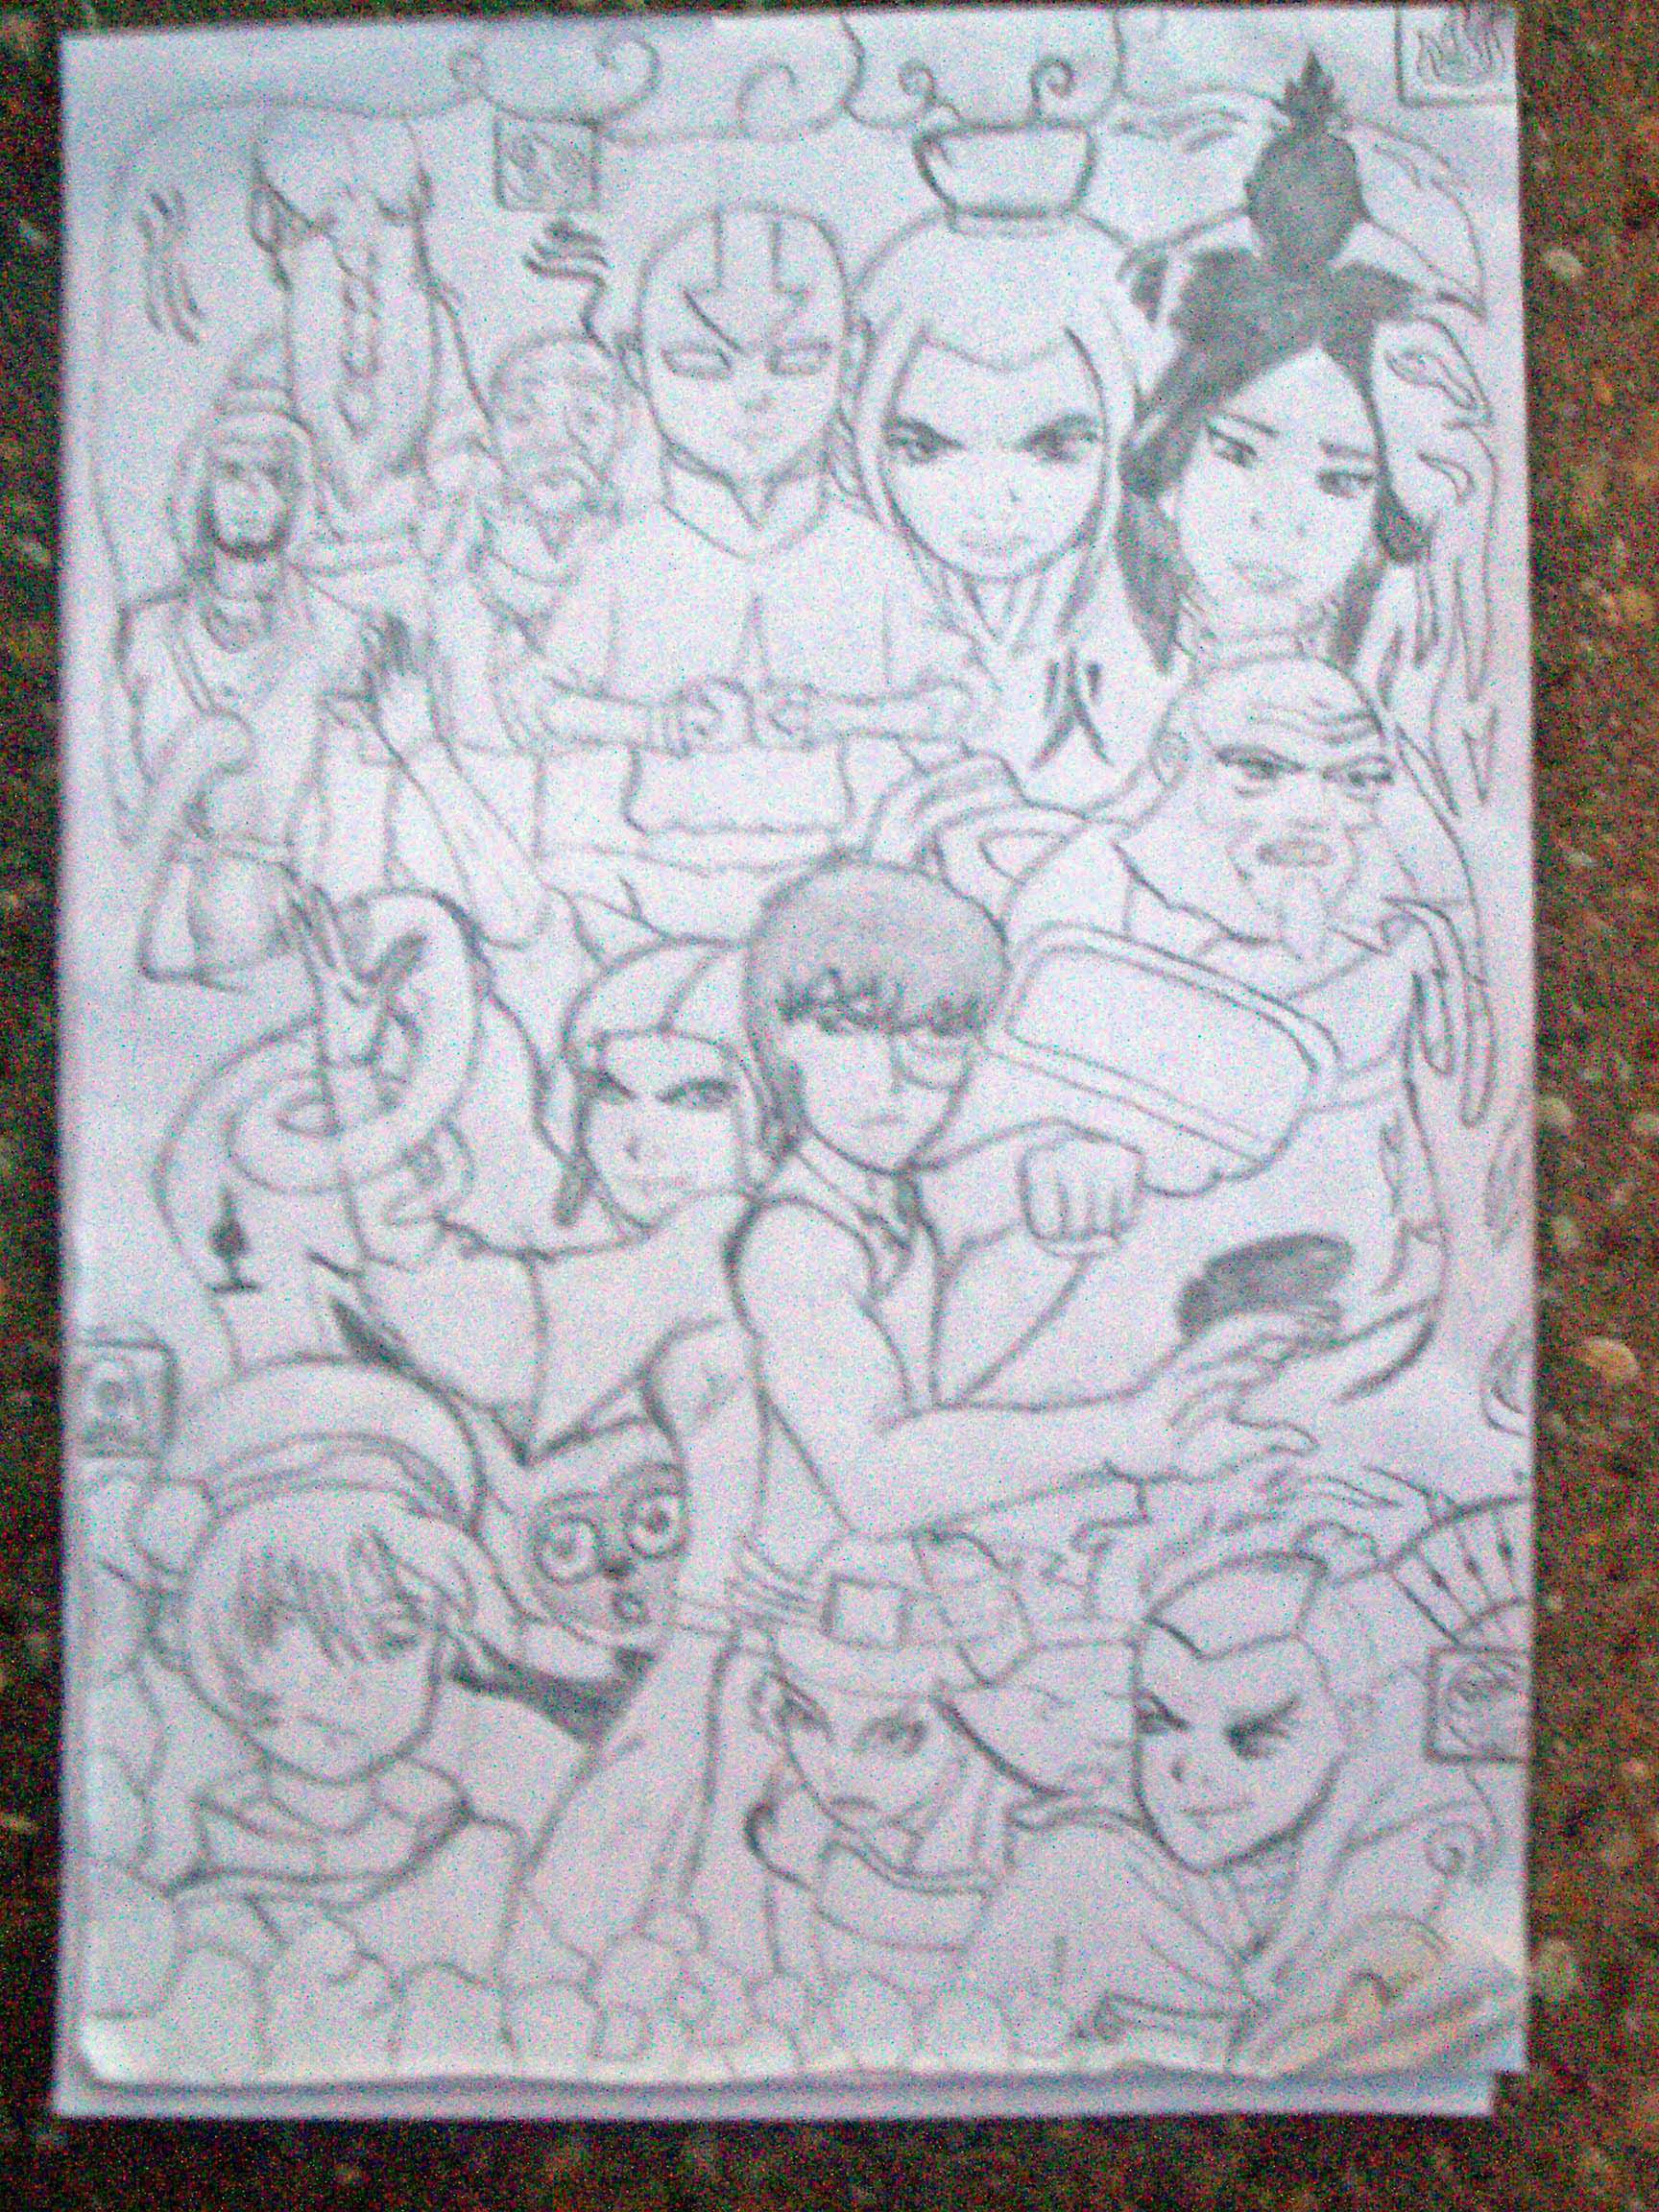 Group drawing by koujo